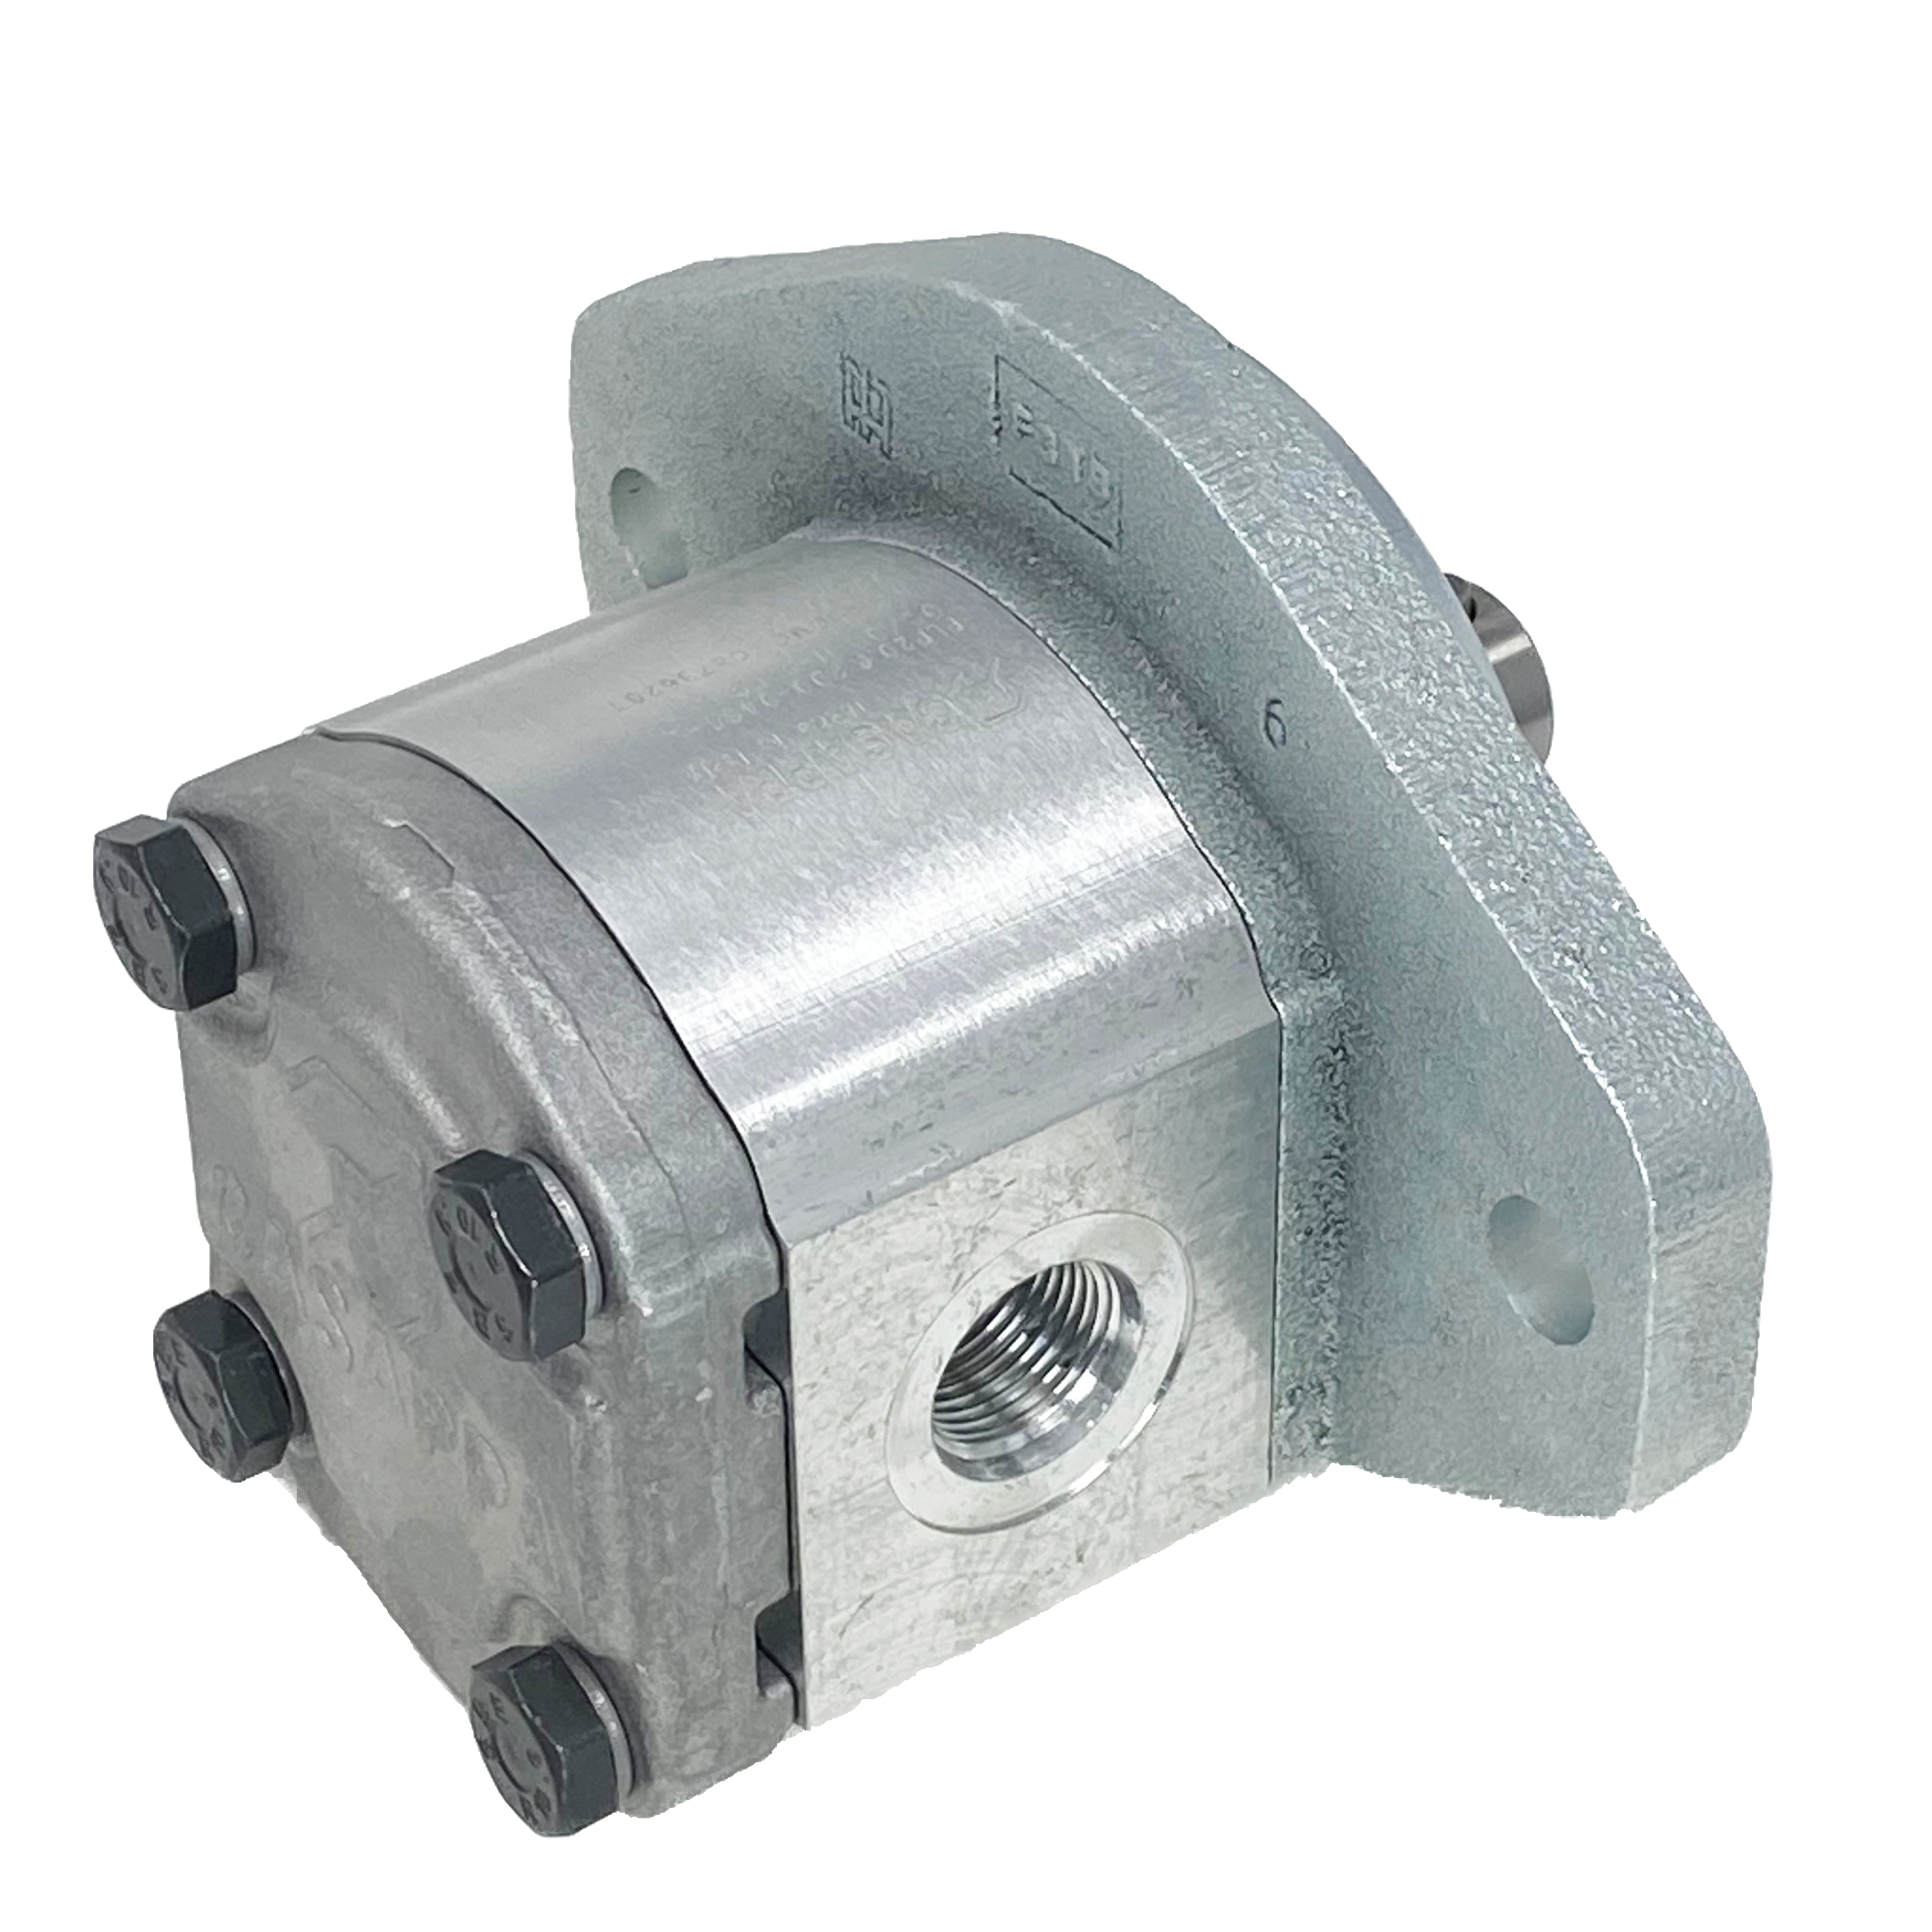 PLM20.6,3B0-31S1-LOC/OC-N-EL : Casappa Polaris Gear Motor, 6.61cc, 3625psi Rated, 4000RPM, Reversible Interior Drain, 5/8" Bore x 5/32" Key Shaft, SAE A 2-Bolt Flange, 0.625 (5/8") #10 SAE Inlet, 0.625 (5/8") #10 SAE Outlet, Aluminum Body & Flange